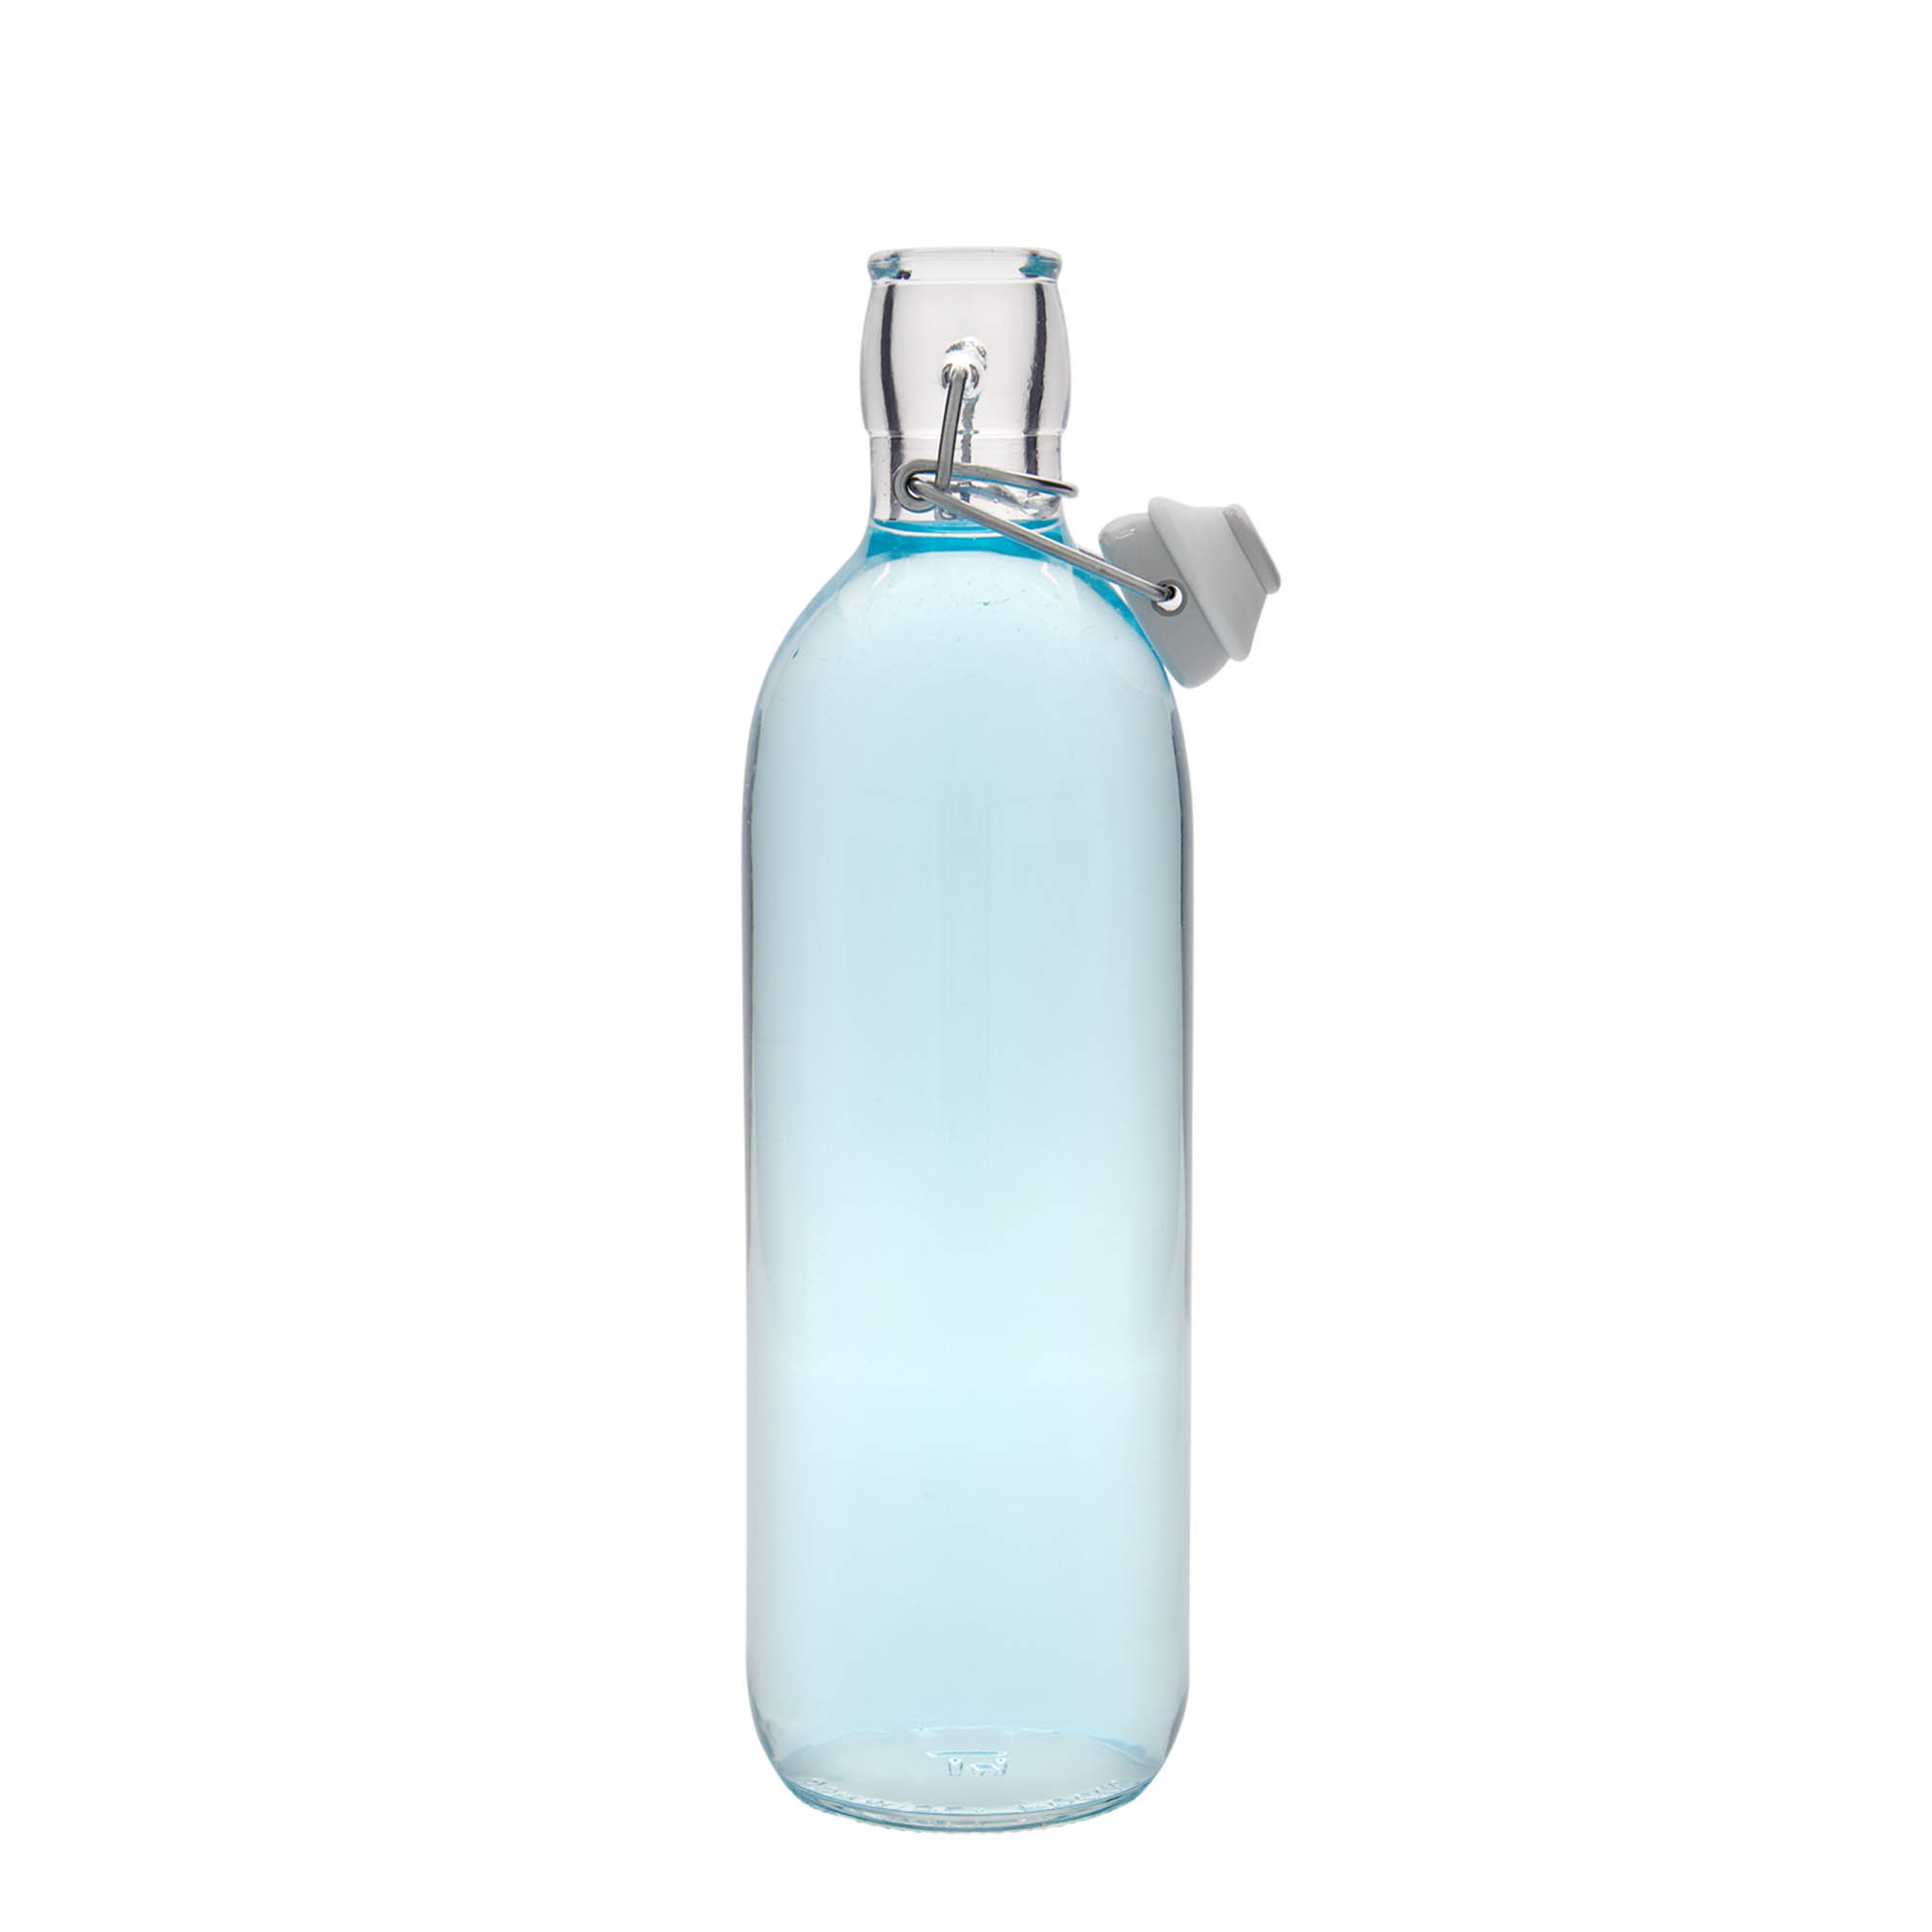 1,000 ml glass bottle 'Emilia', closure: swing top